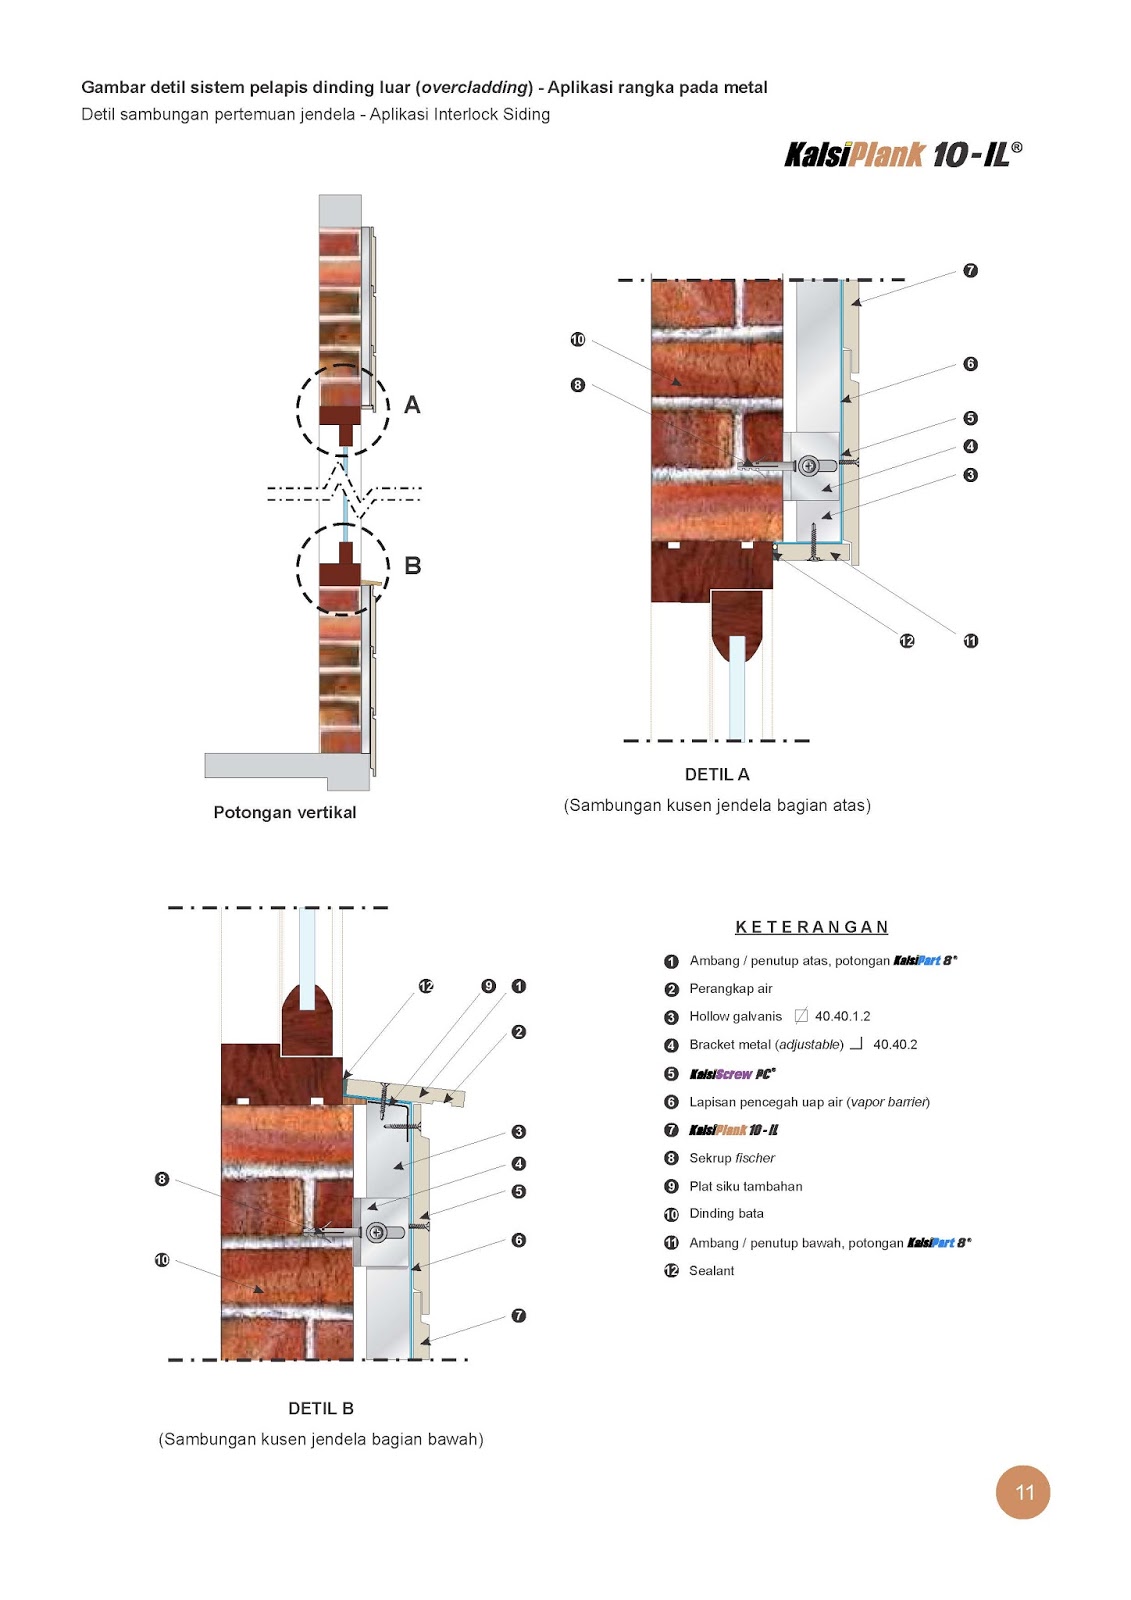  Cara  Pemasangan Kalsiplank Listplank Dinding dan lantai